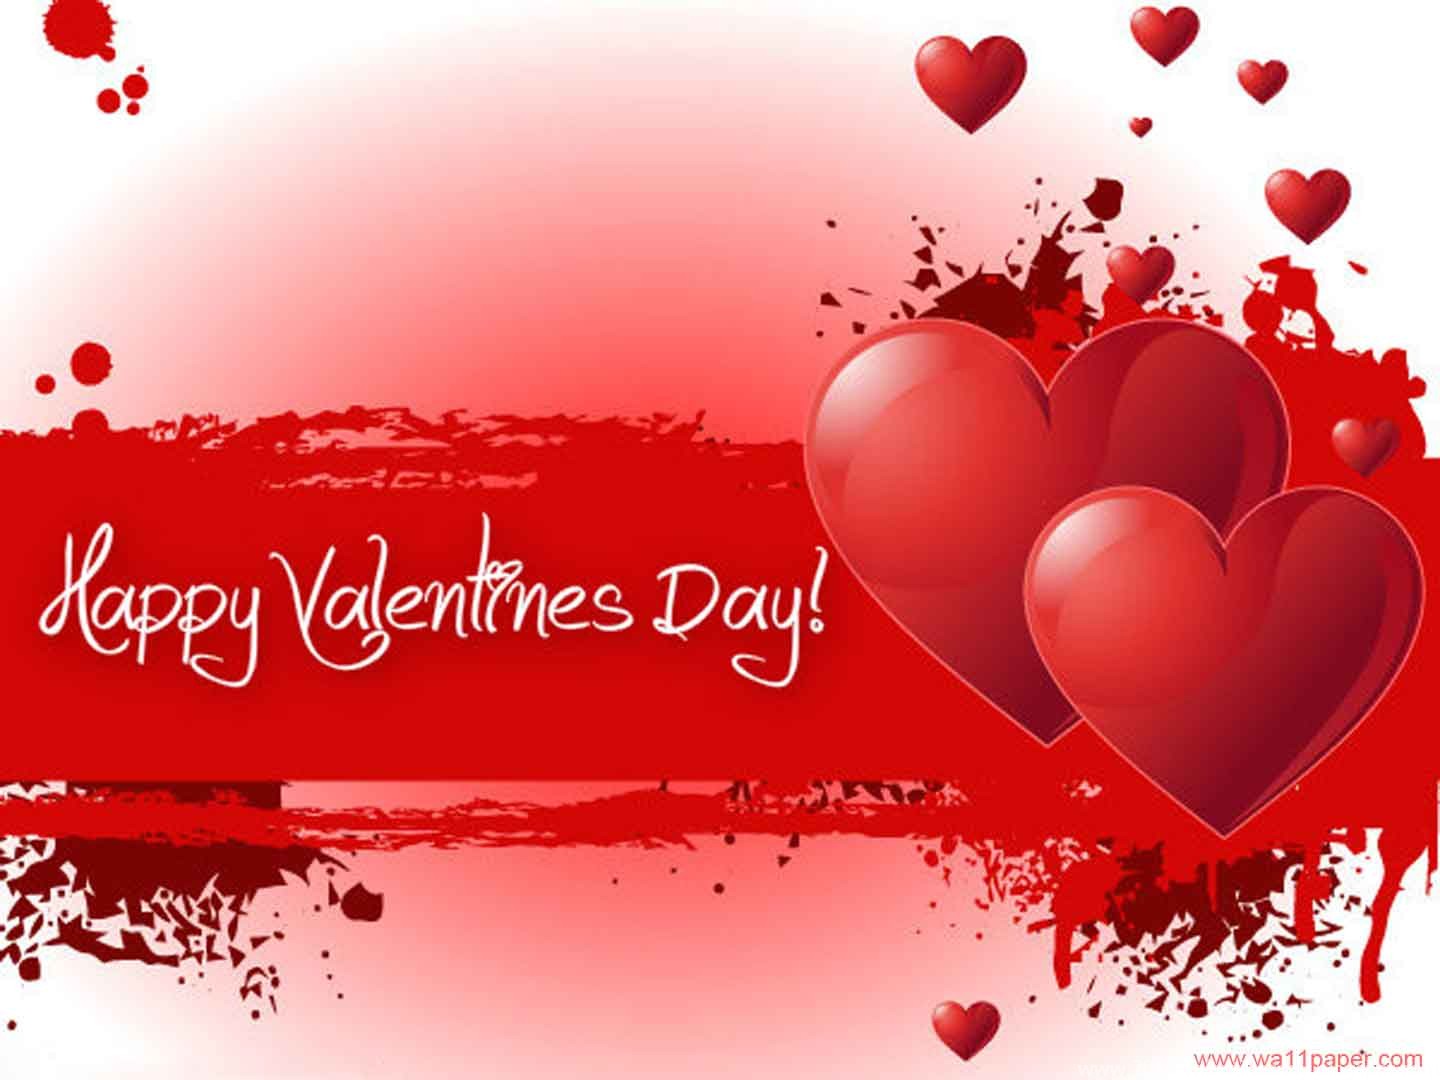 Valentines day poems, valentines day pictures, valentine messages ...